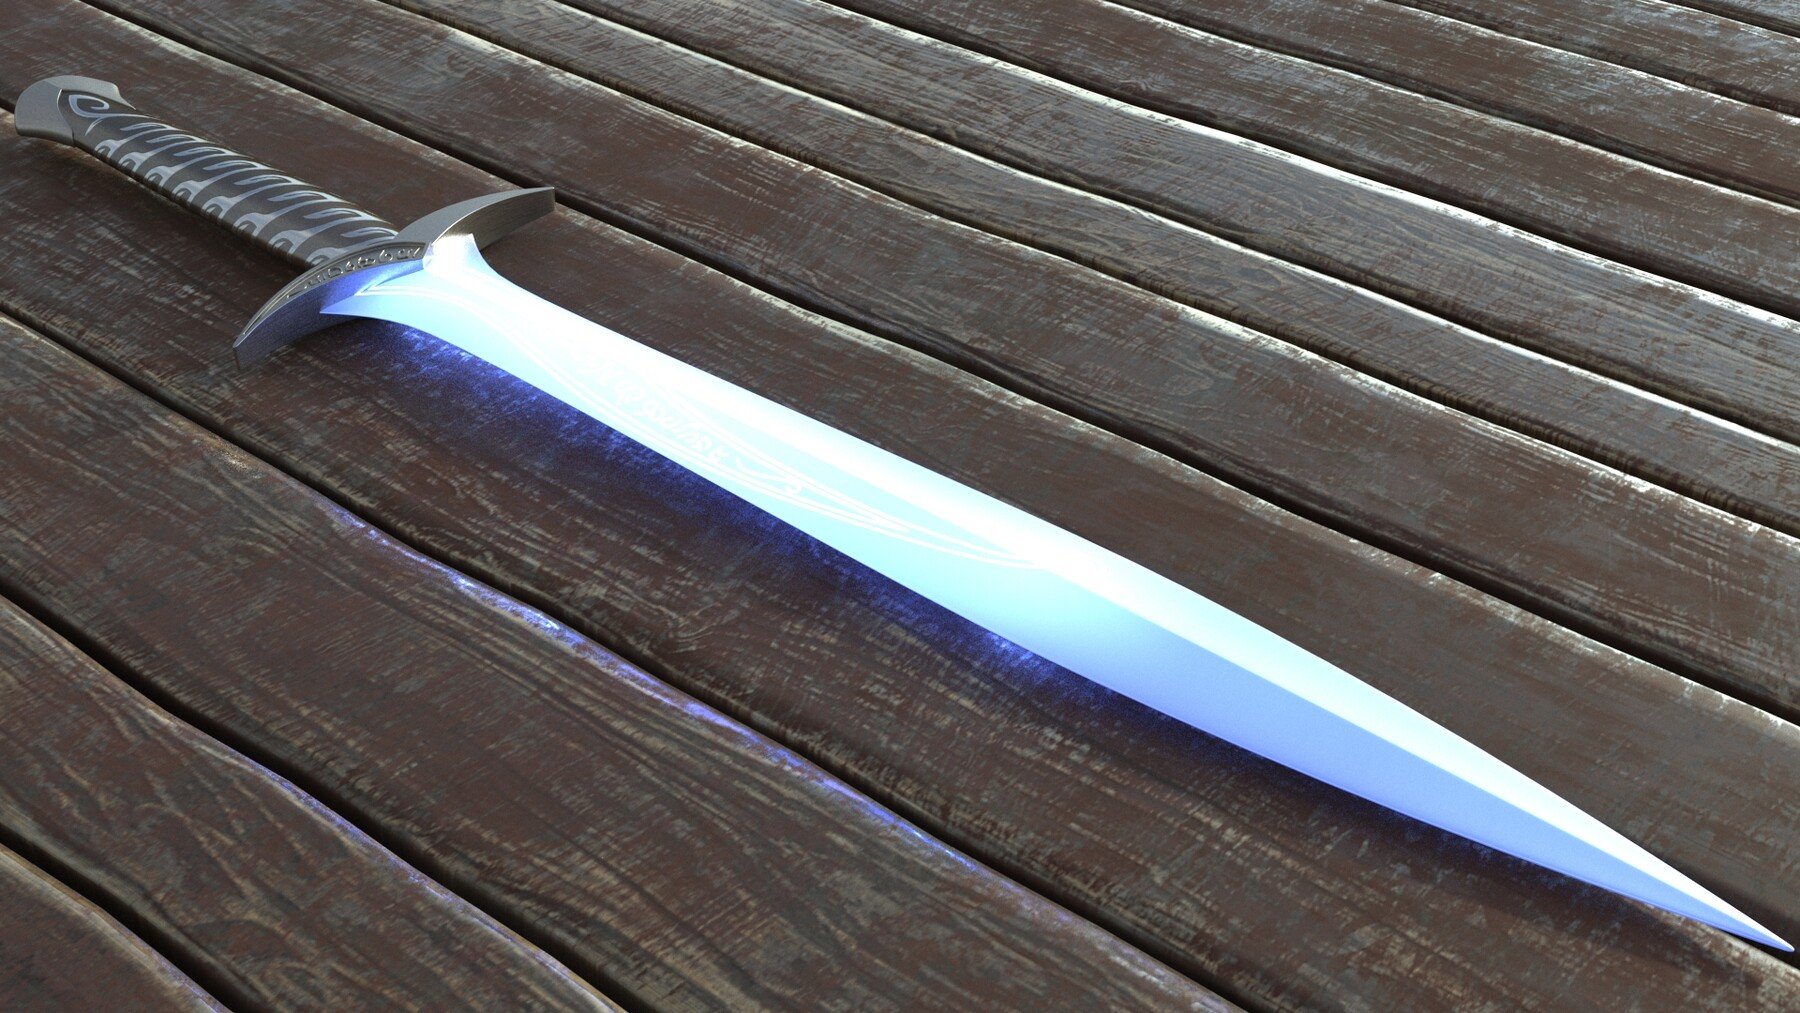 sting sword glow